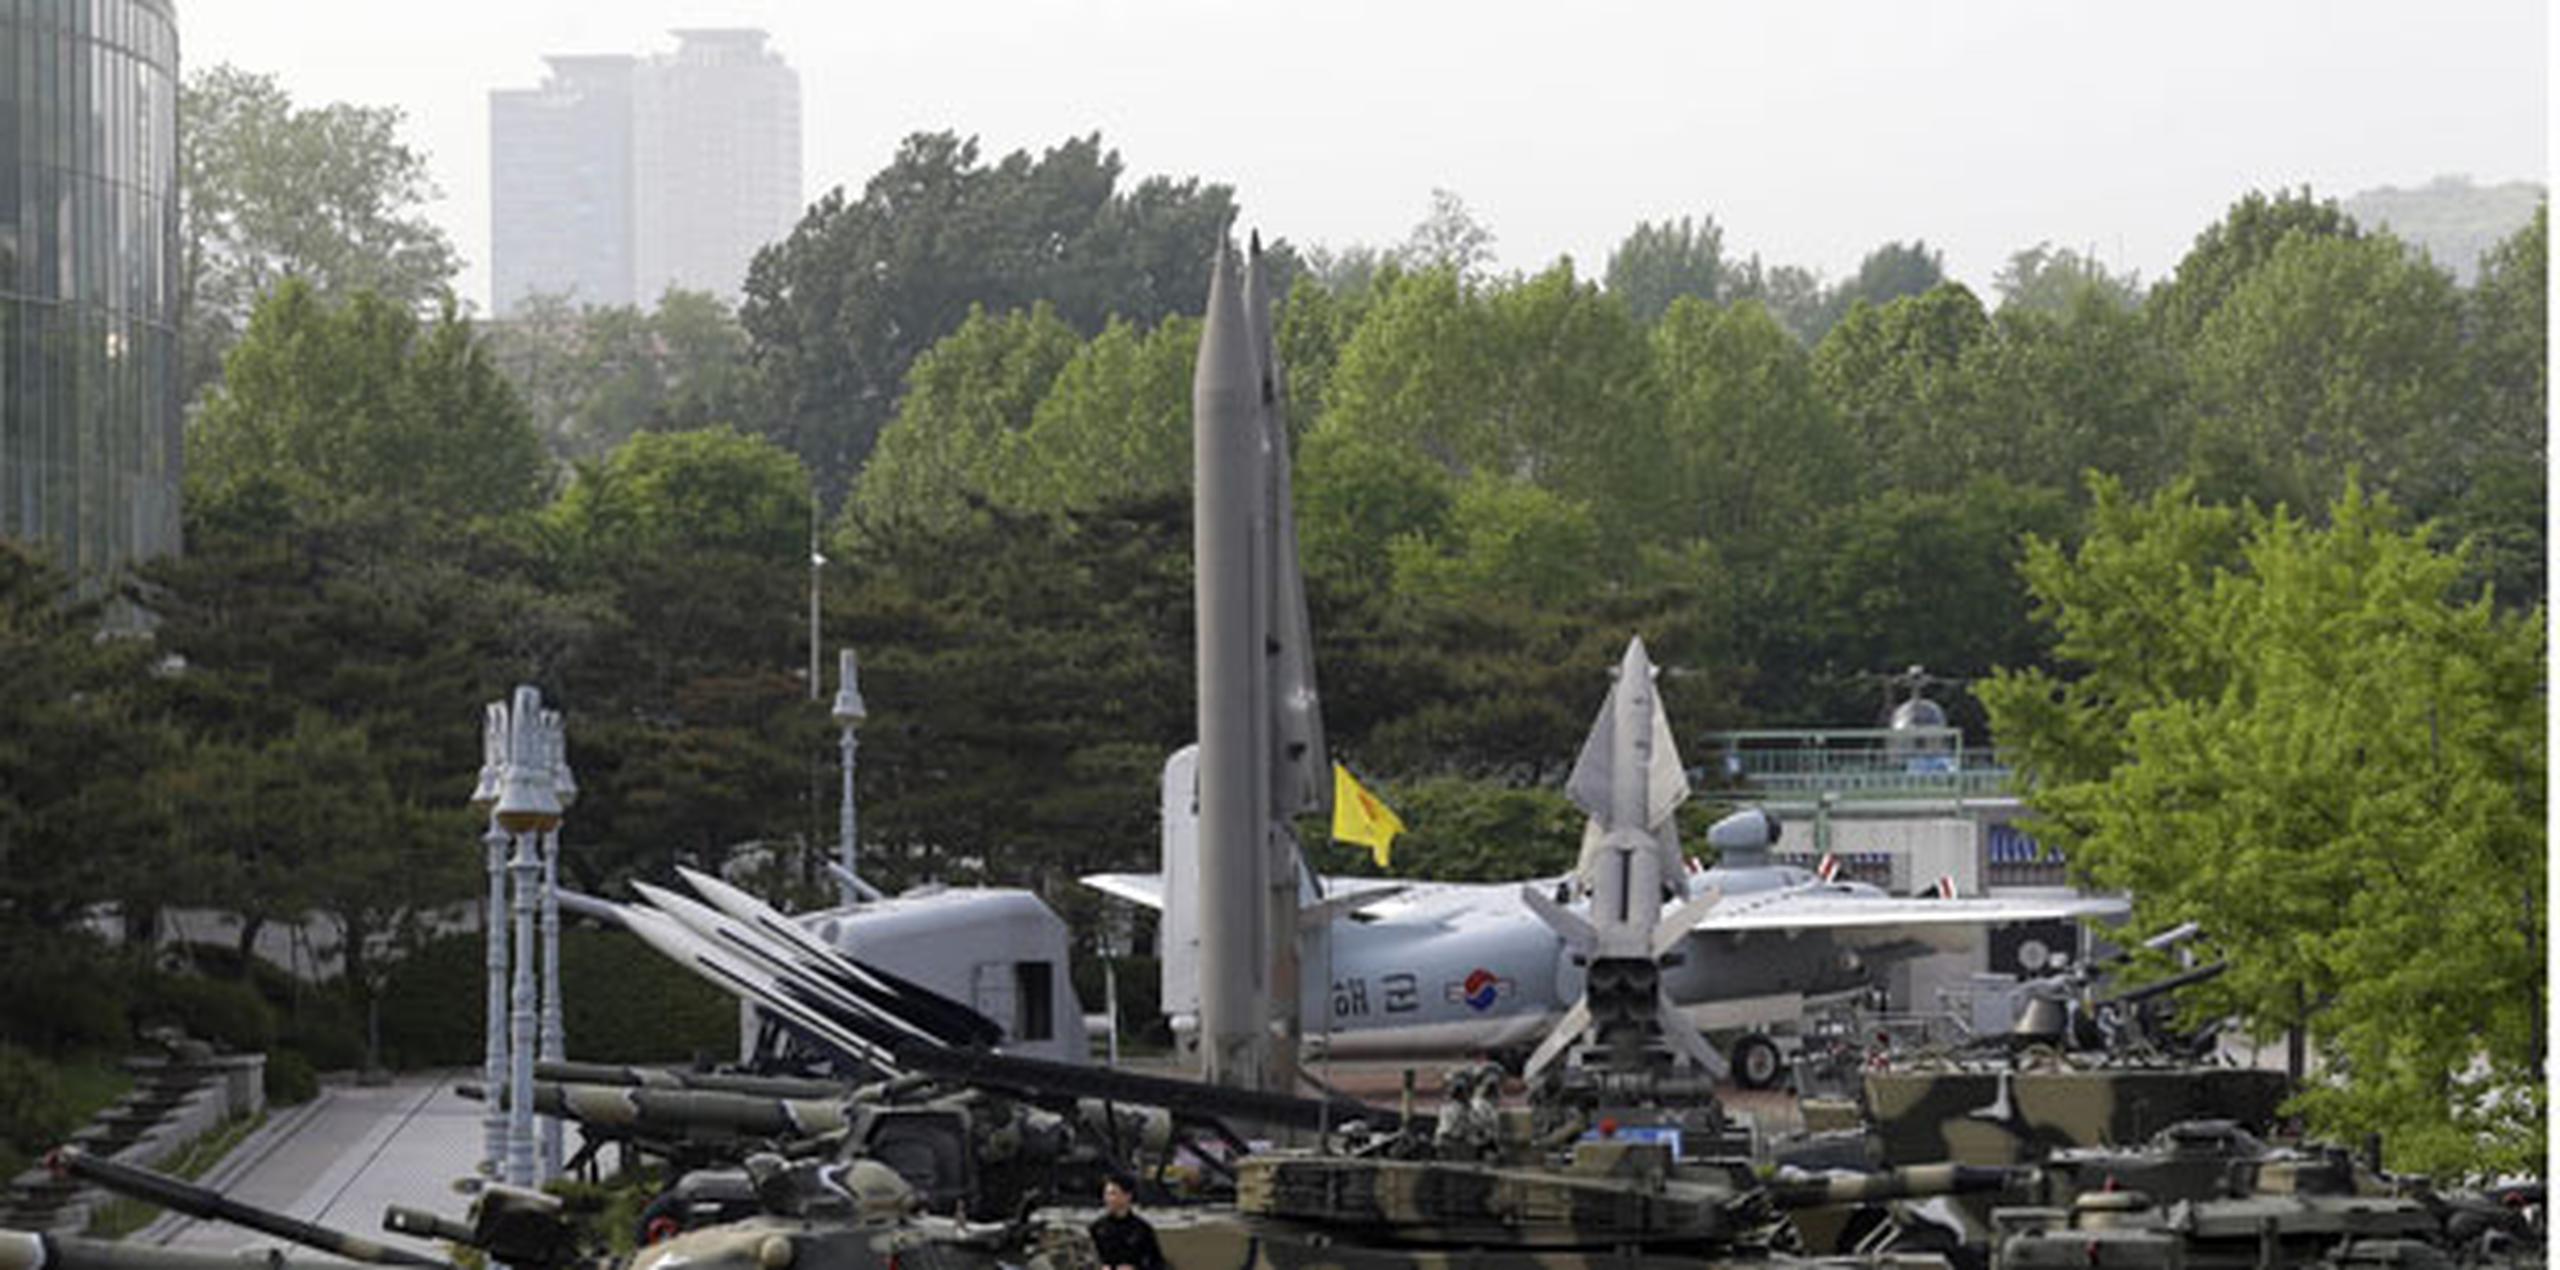 Seúl dijo que está analizando si los proyectiles eran misiles o un nuevo tipo de artillería. (Prensa Asociada/Lee Jin-man)